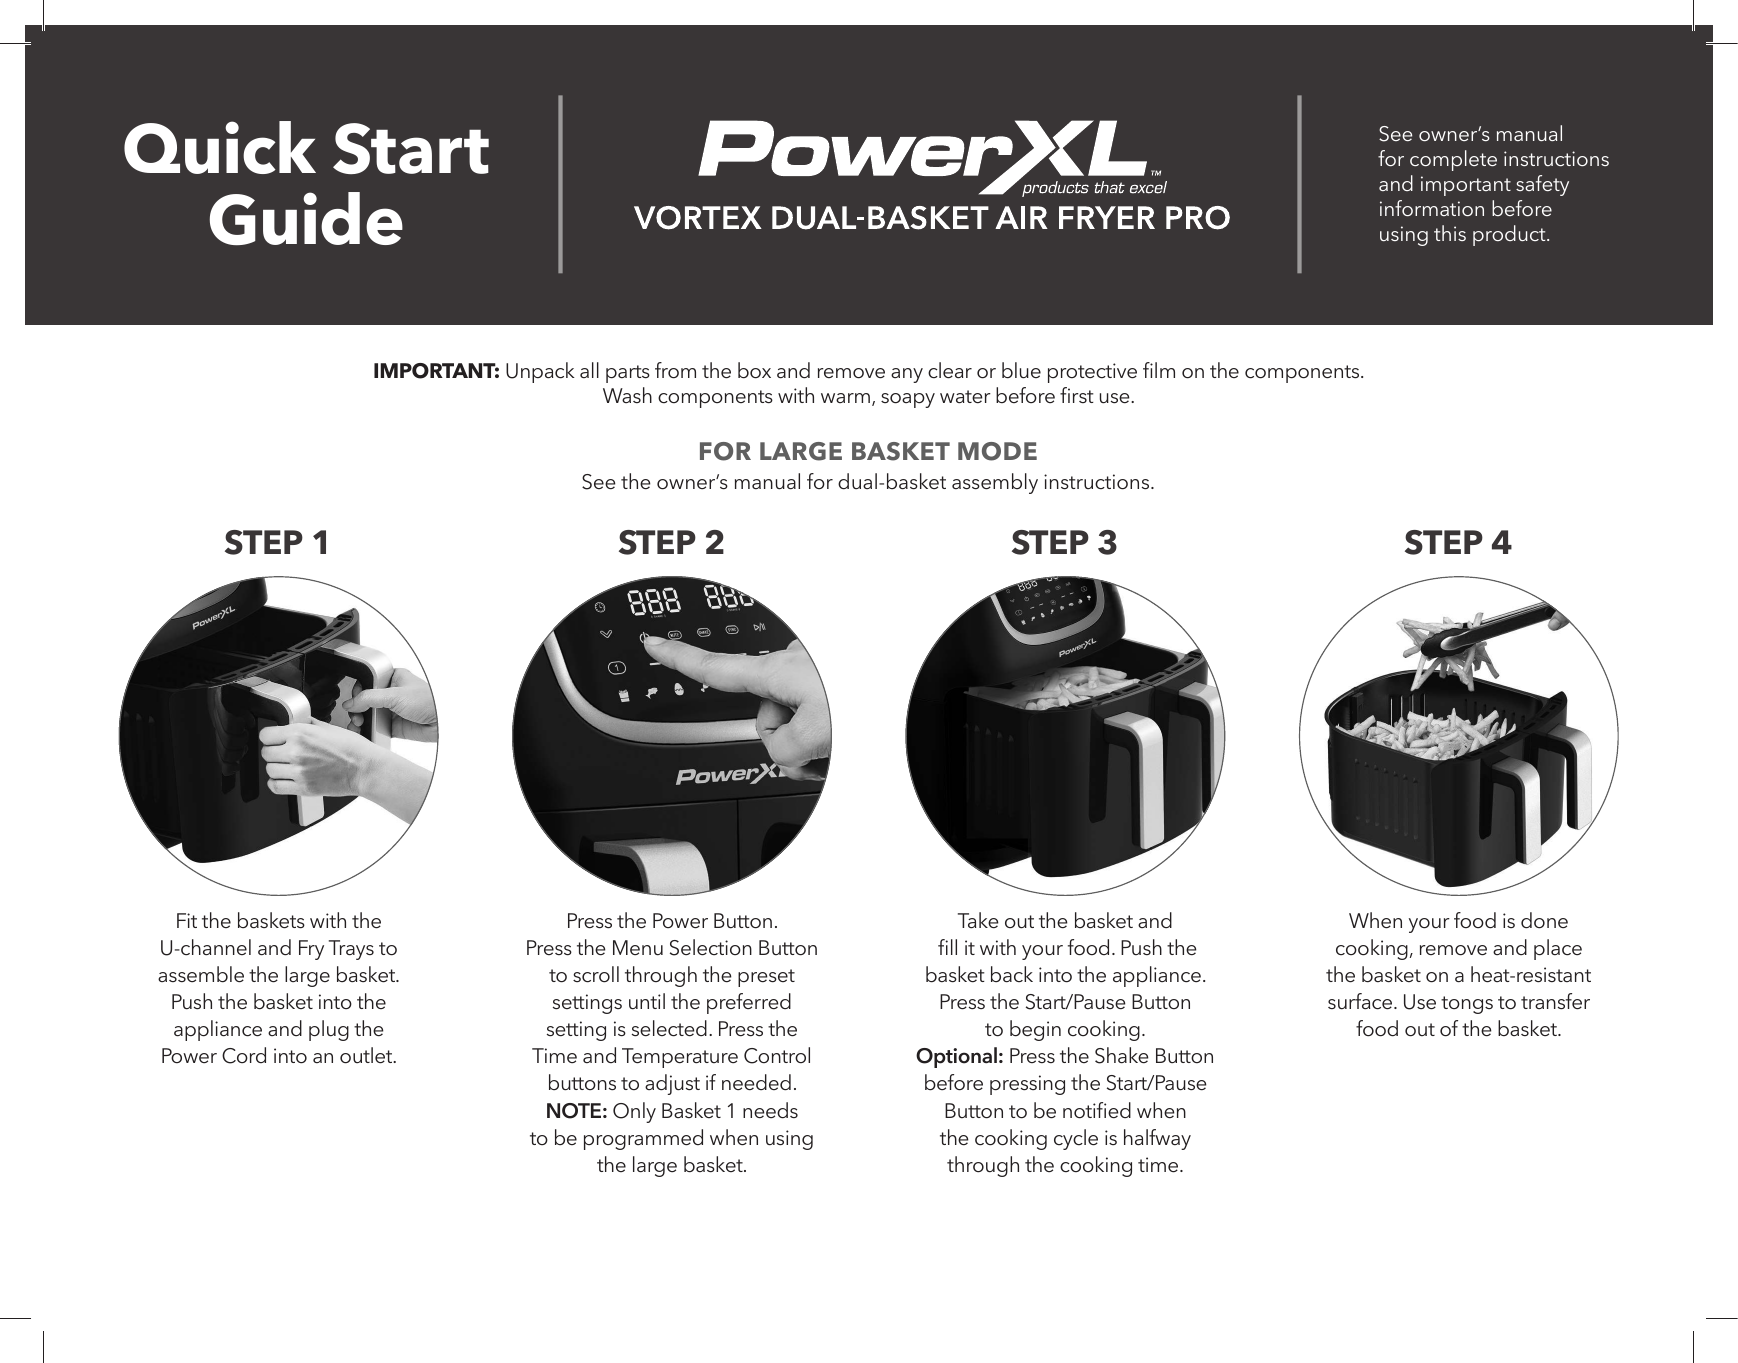 How to Operate Using One Basket  10-qt PowerXL Vortex Dual Basket Air Fryer  - DUAF-10 